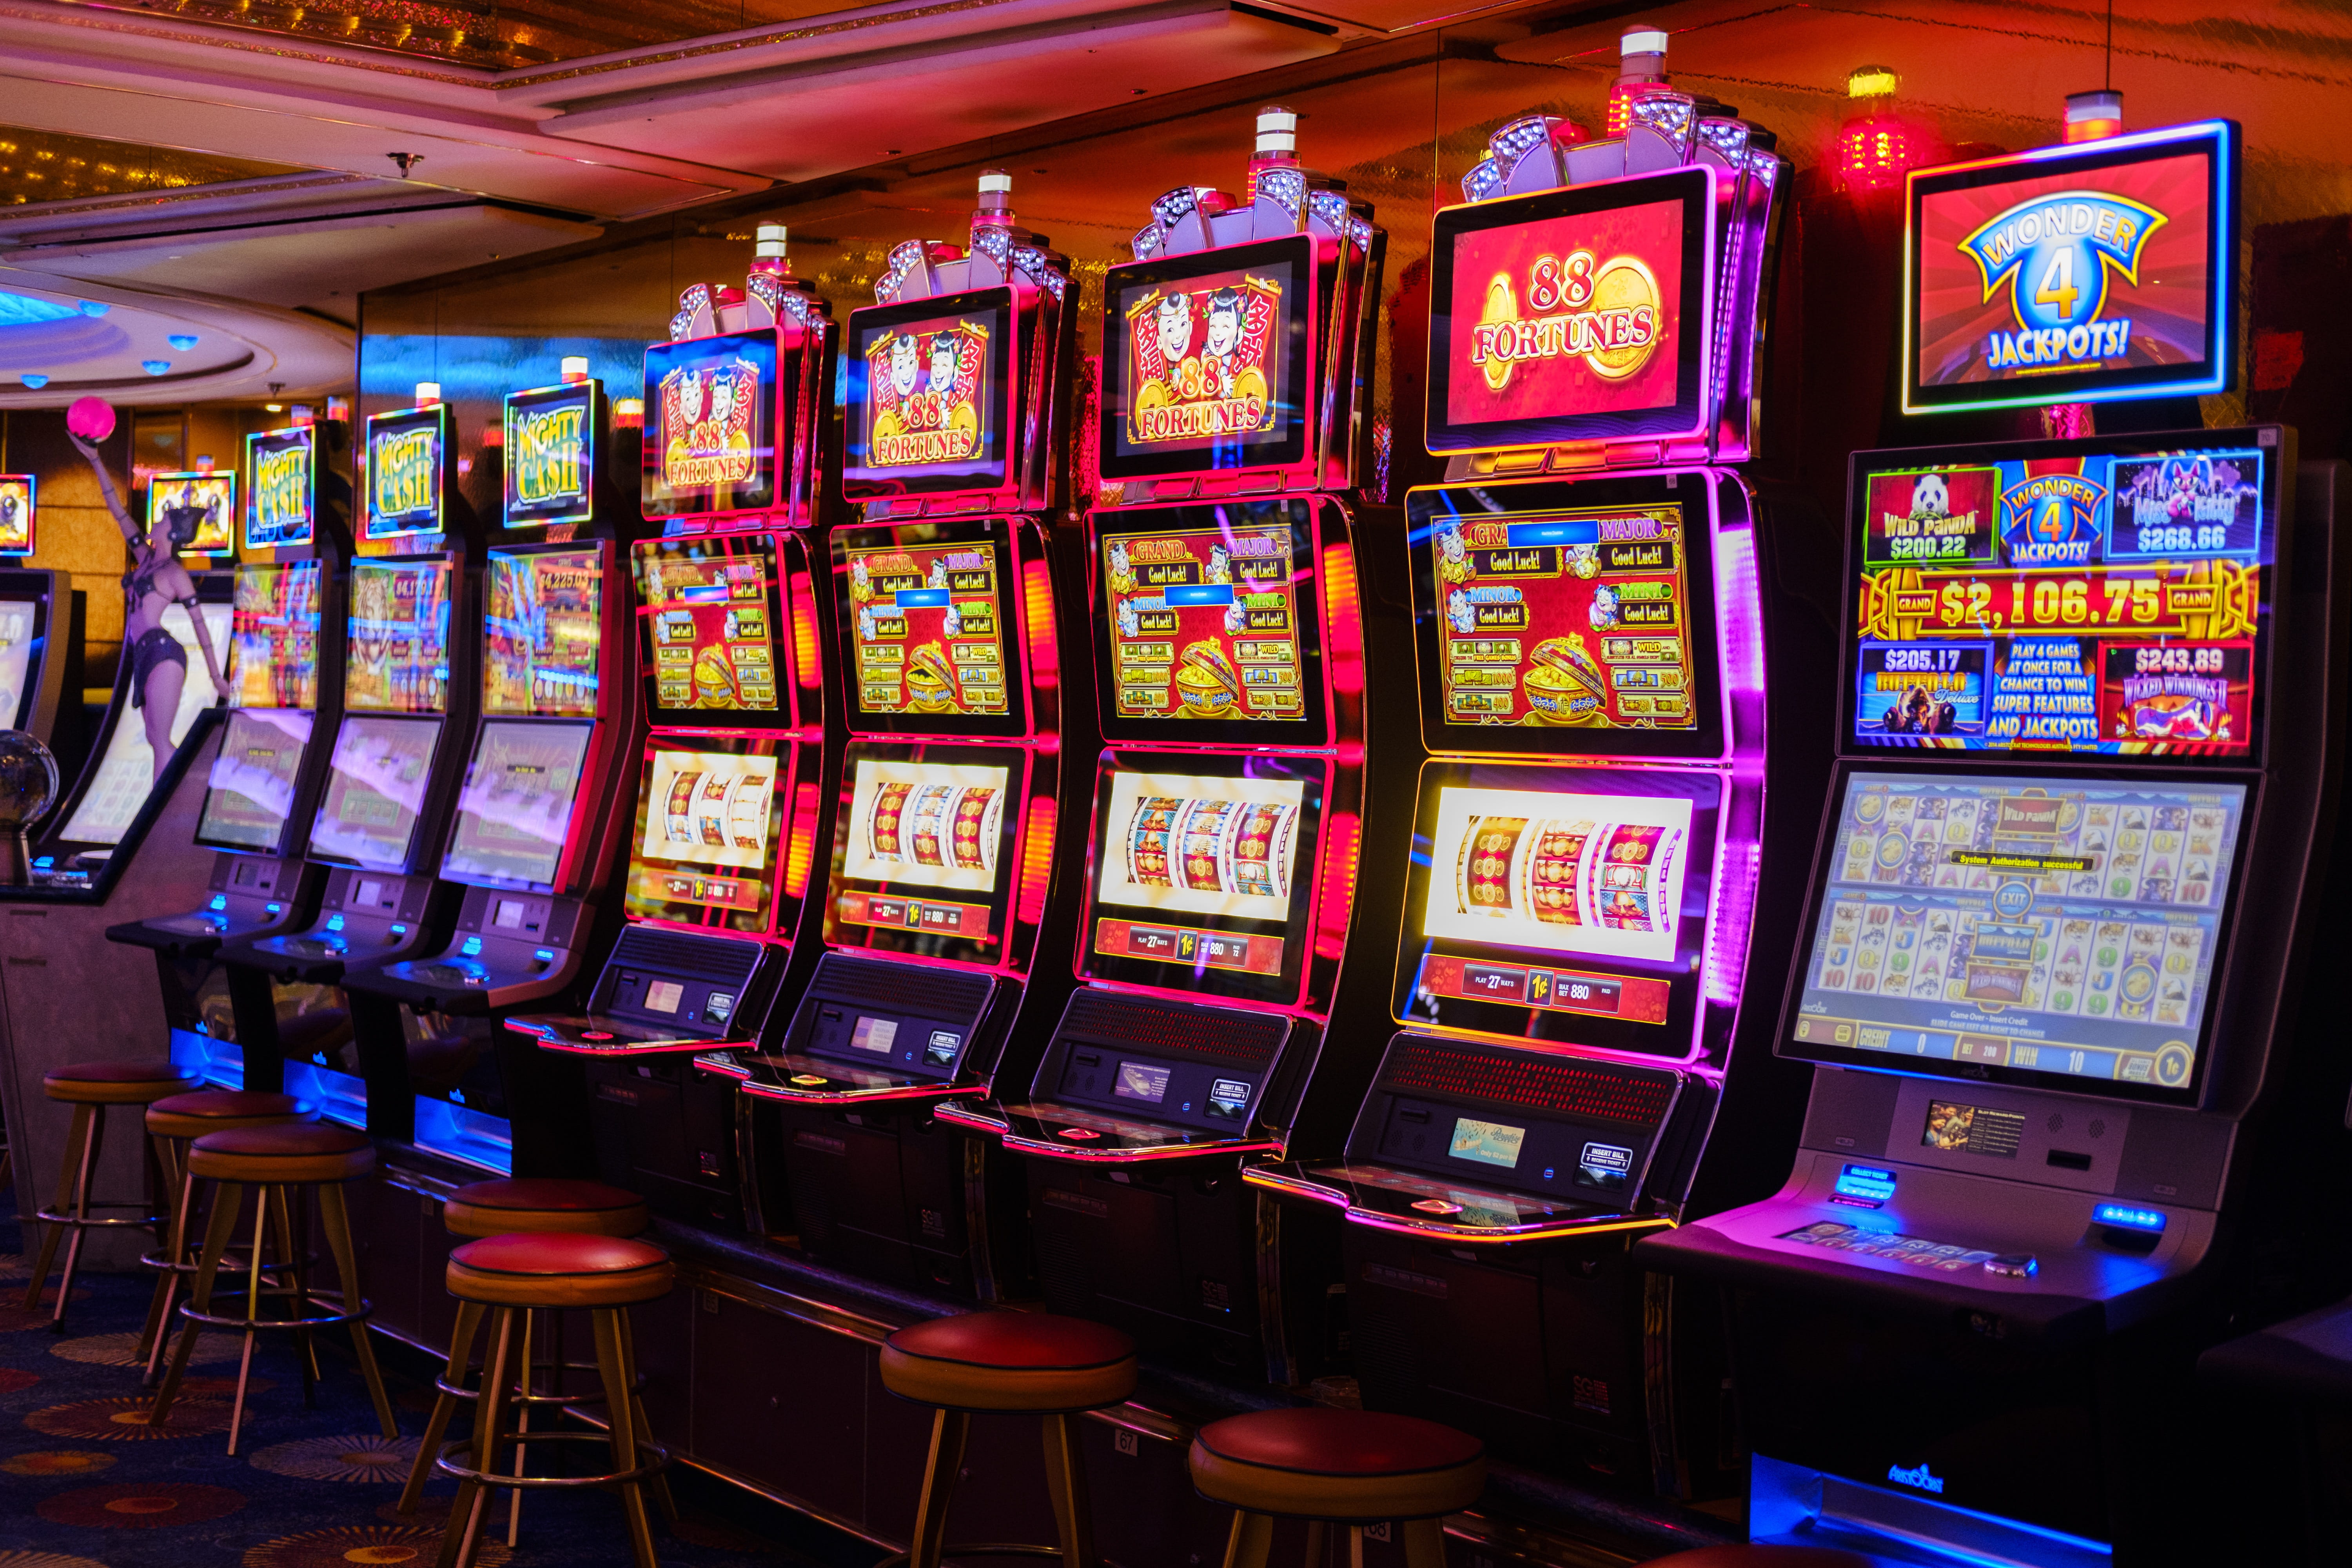 casino, arcade, slot machines, gambling, risk, jackpot, money